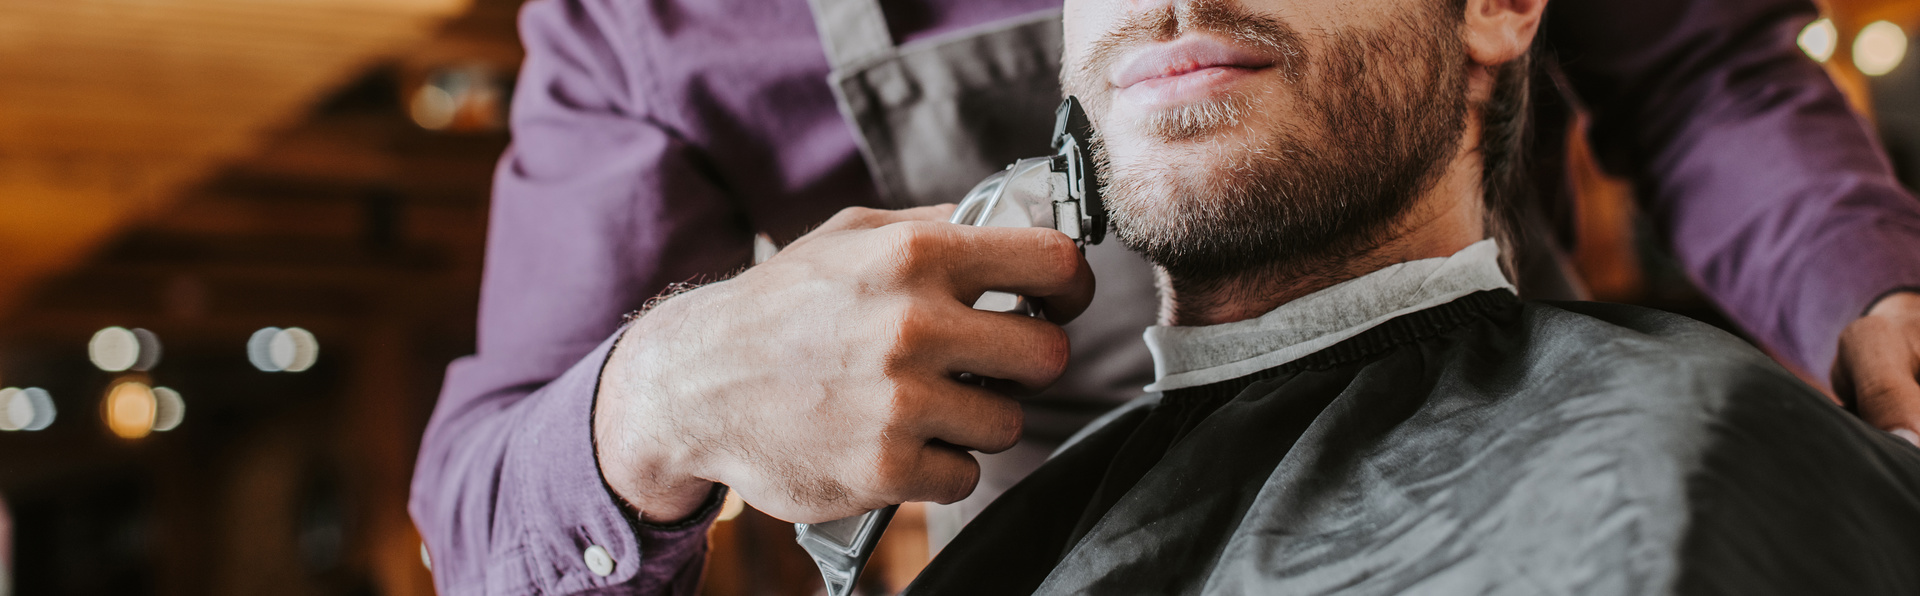 panoramic shot of barber holding trimmer while shaving bearded man